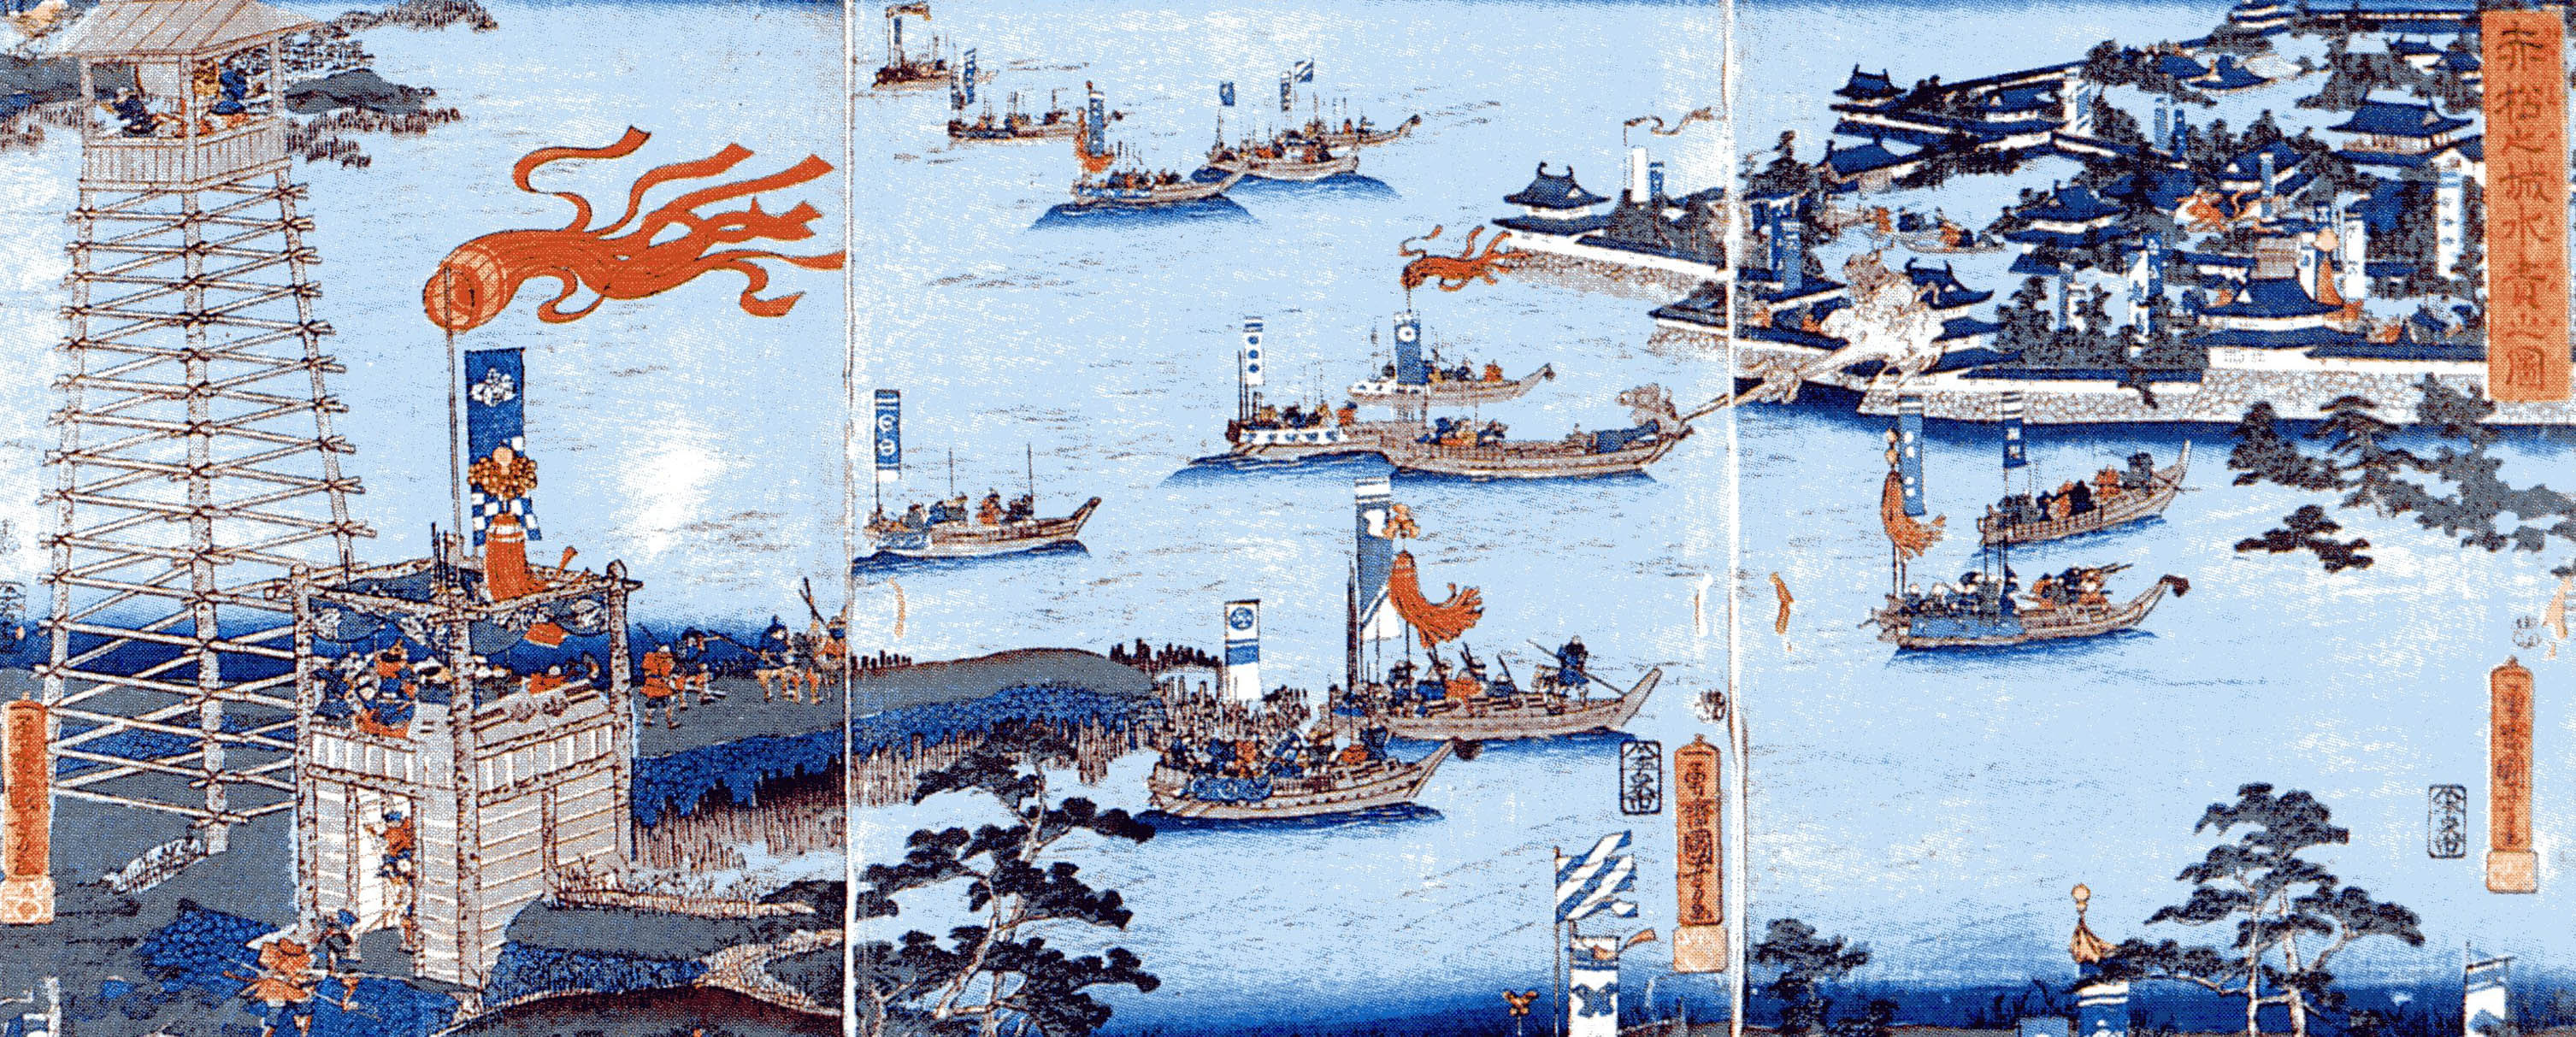 An artist's depiction of the mizuseme seige attack on Bitchutakamatsu Castle